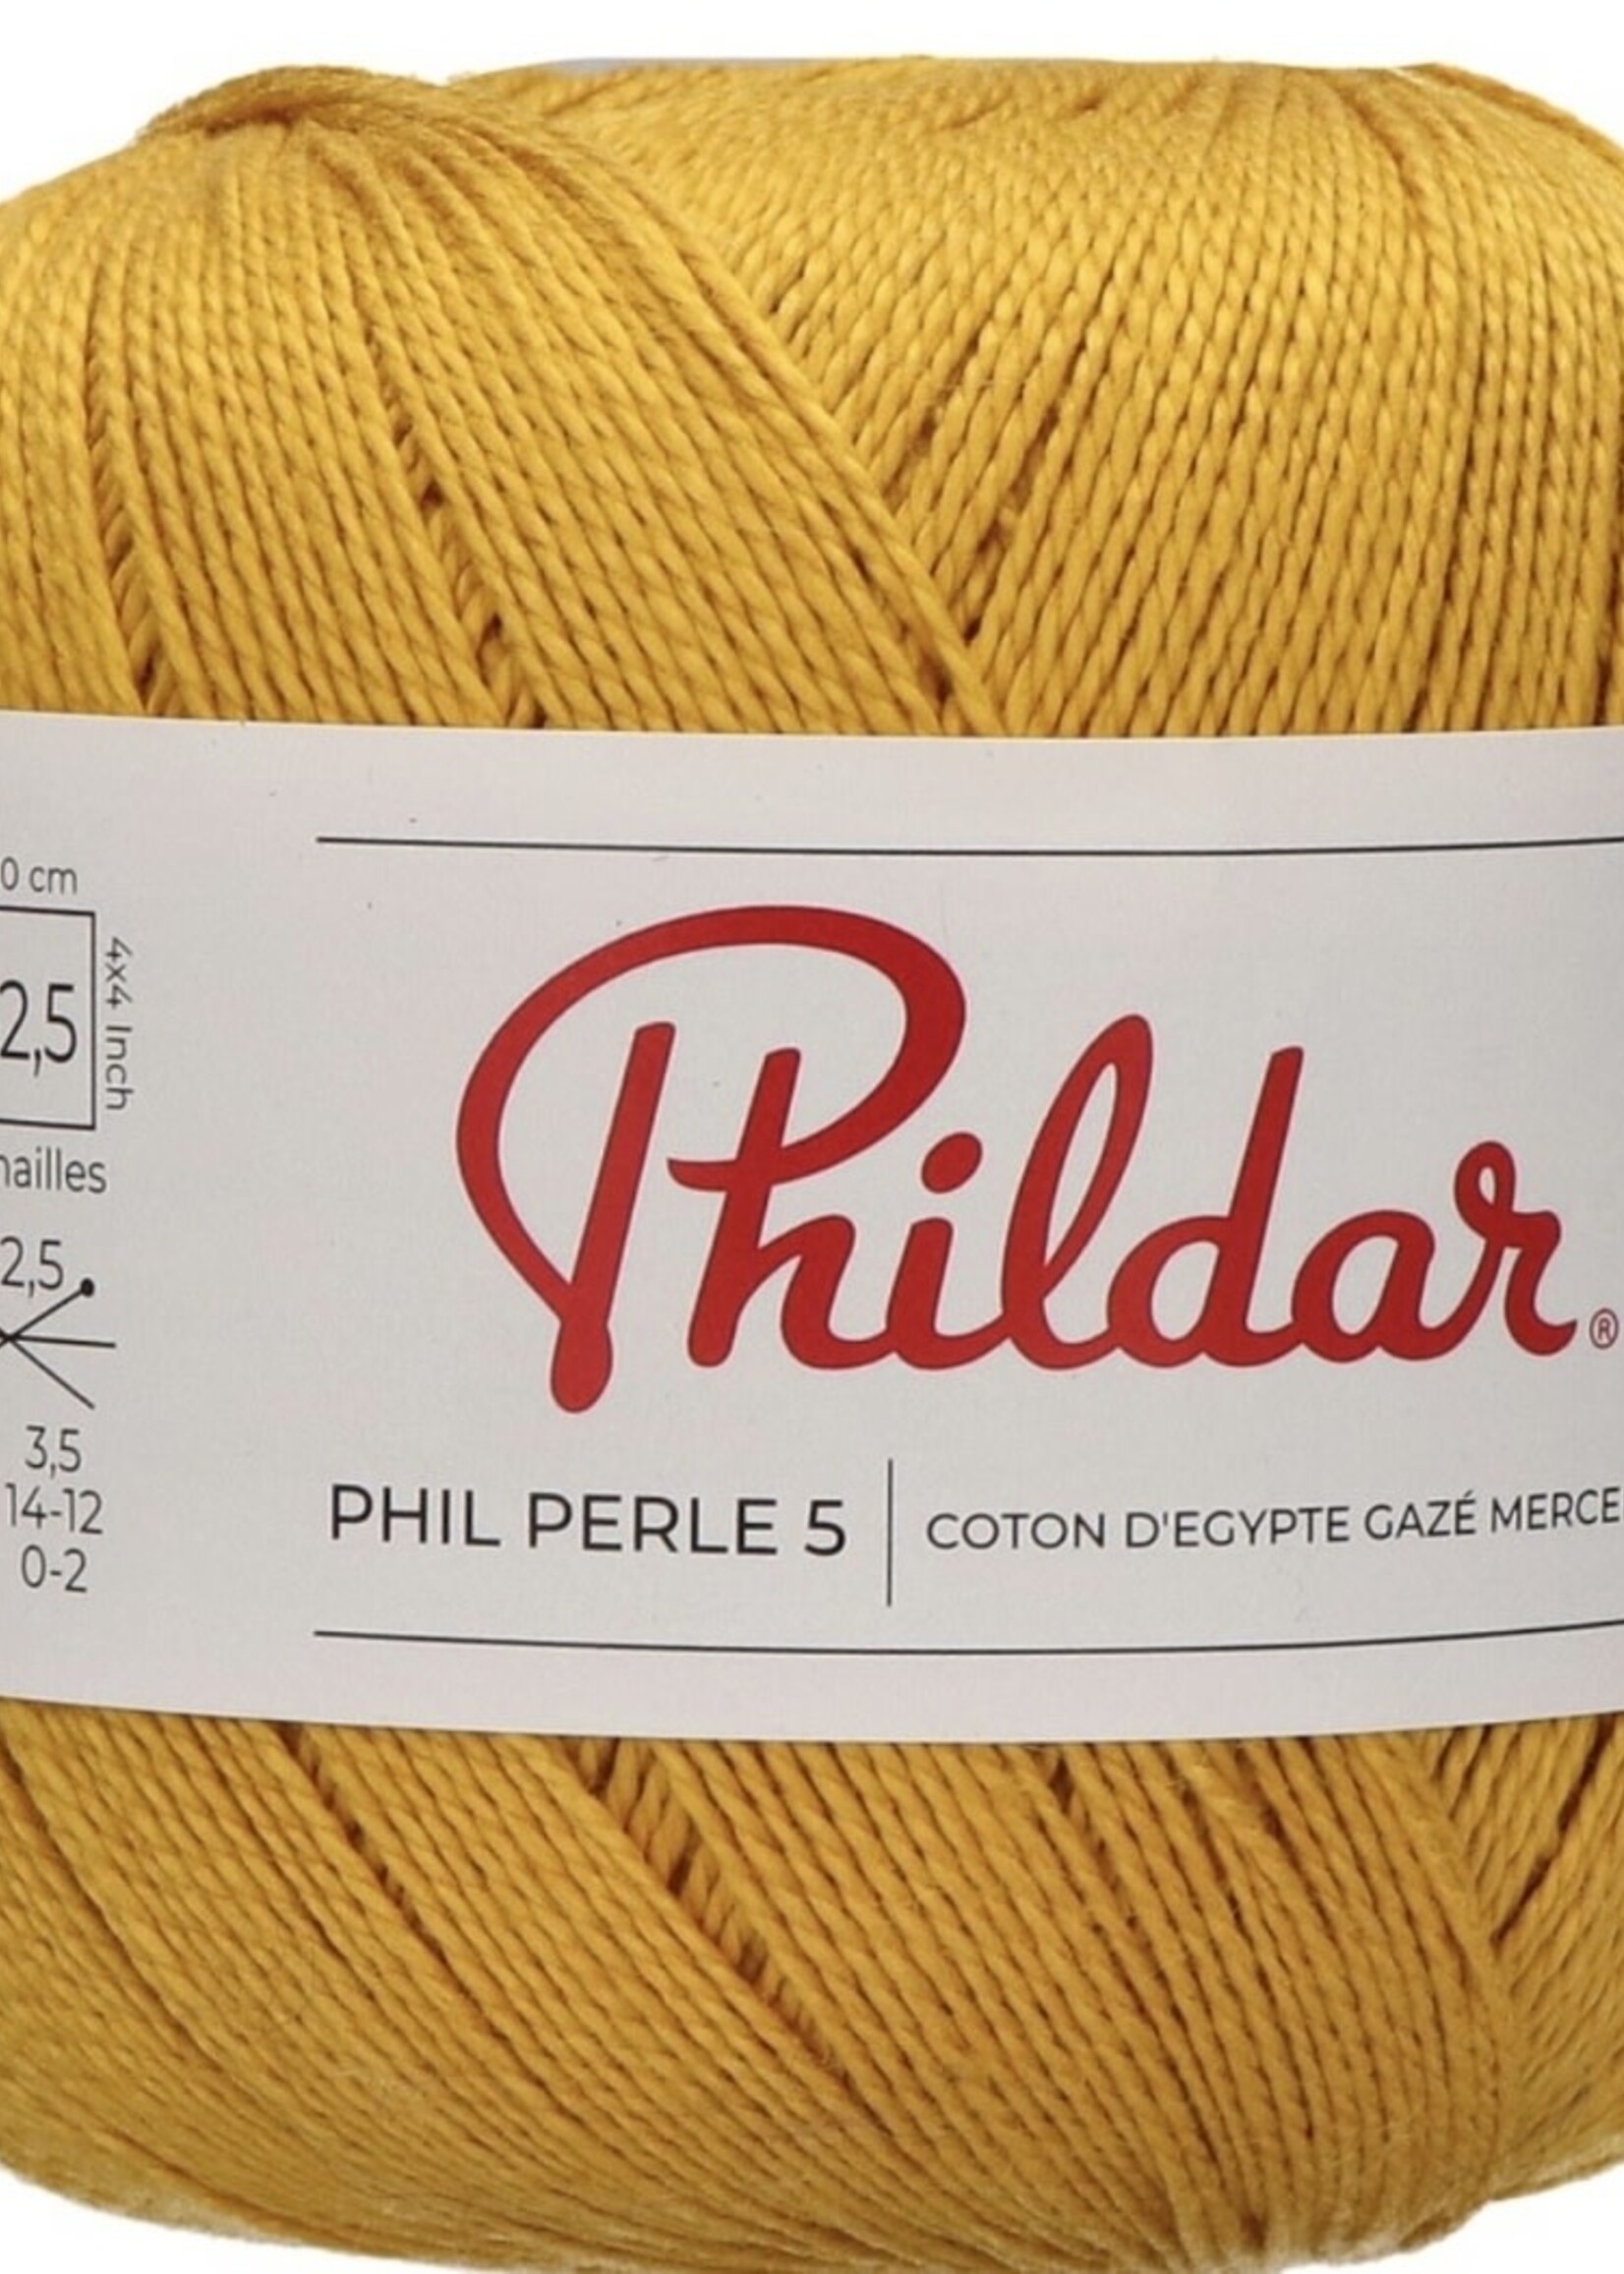 Phildar Phil Perle 5 - Phildar -2019 Tournesol